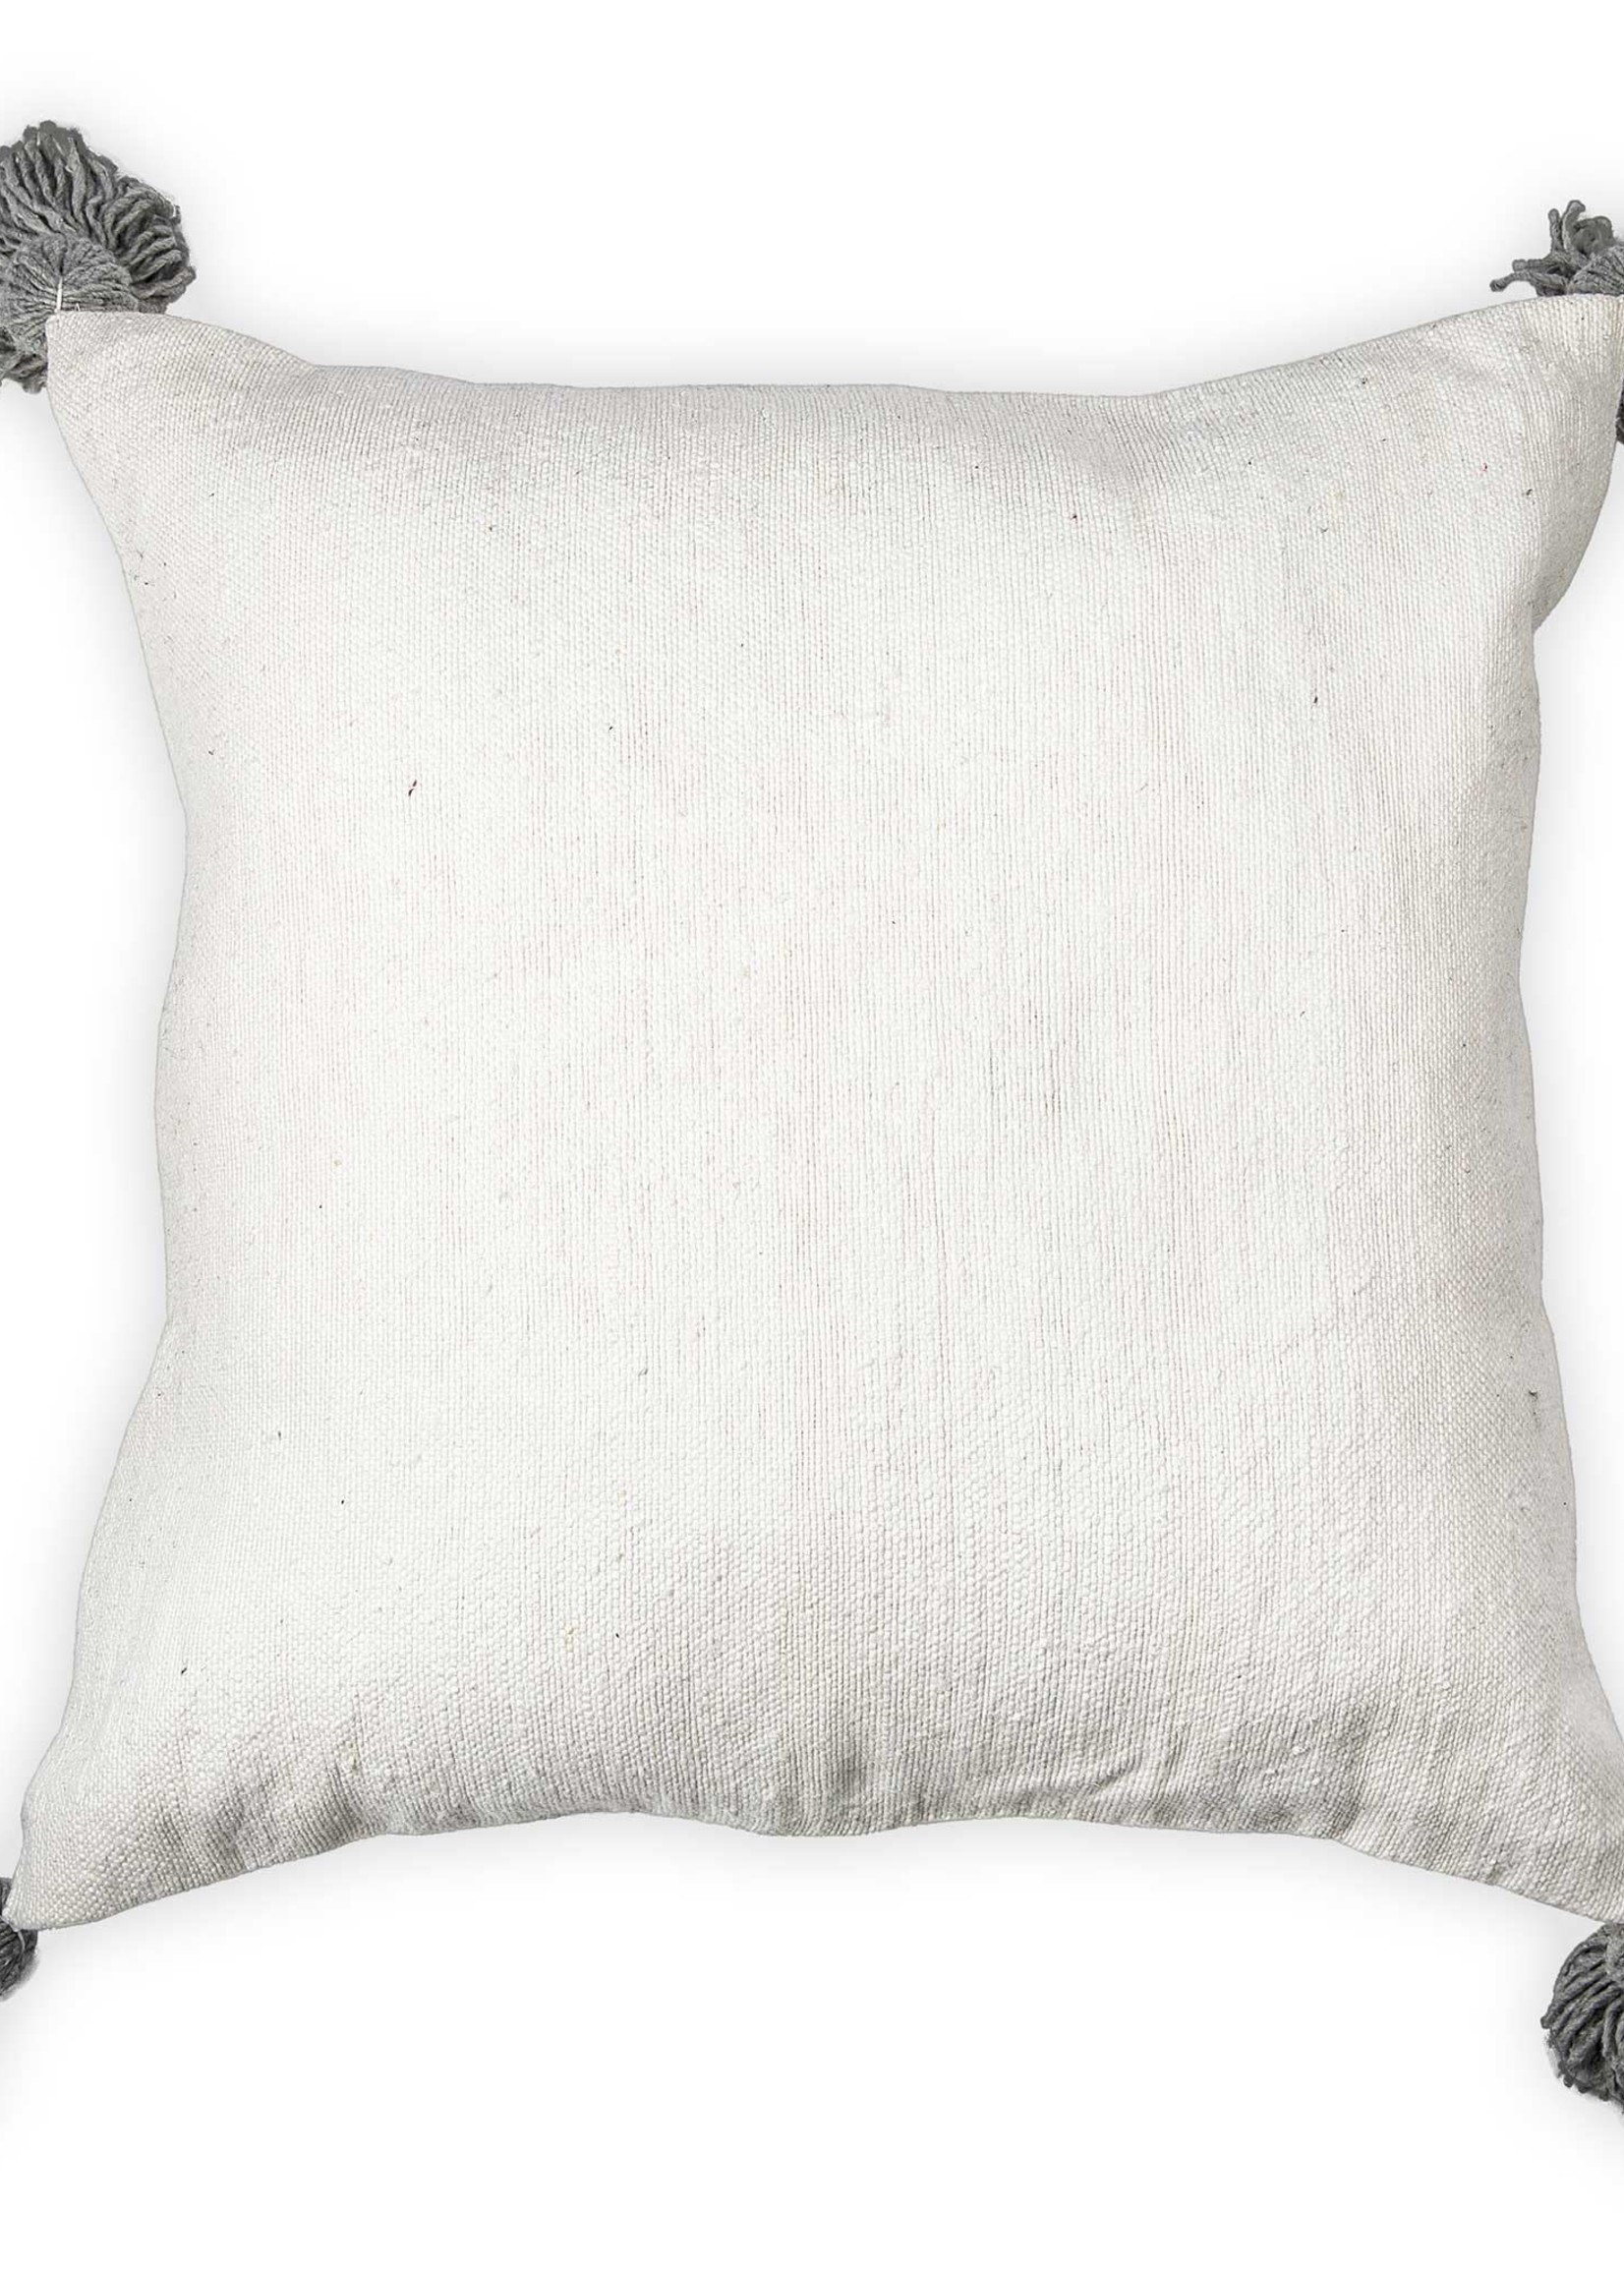 Pokoloko Moroccan Pillow - 20x20 - Light Grey Pom